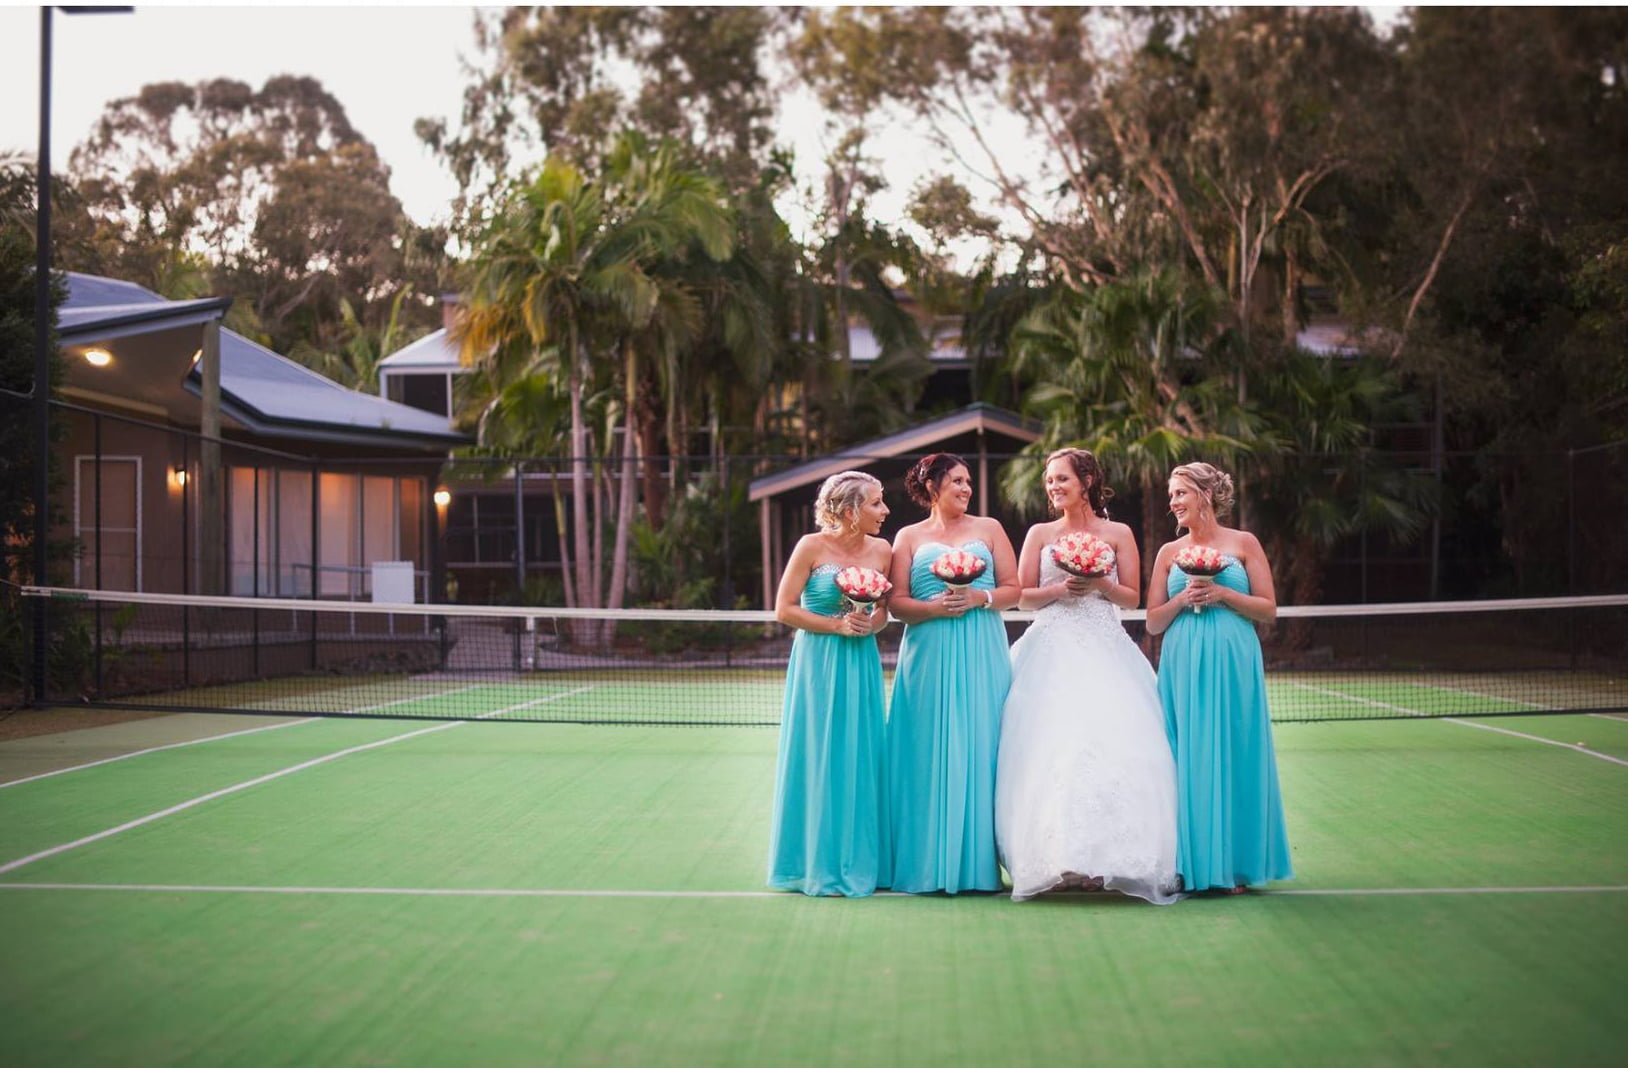 Bridesmaids ona tennis court